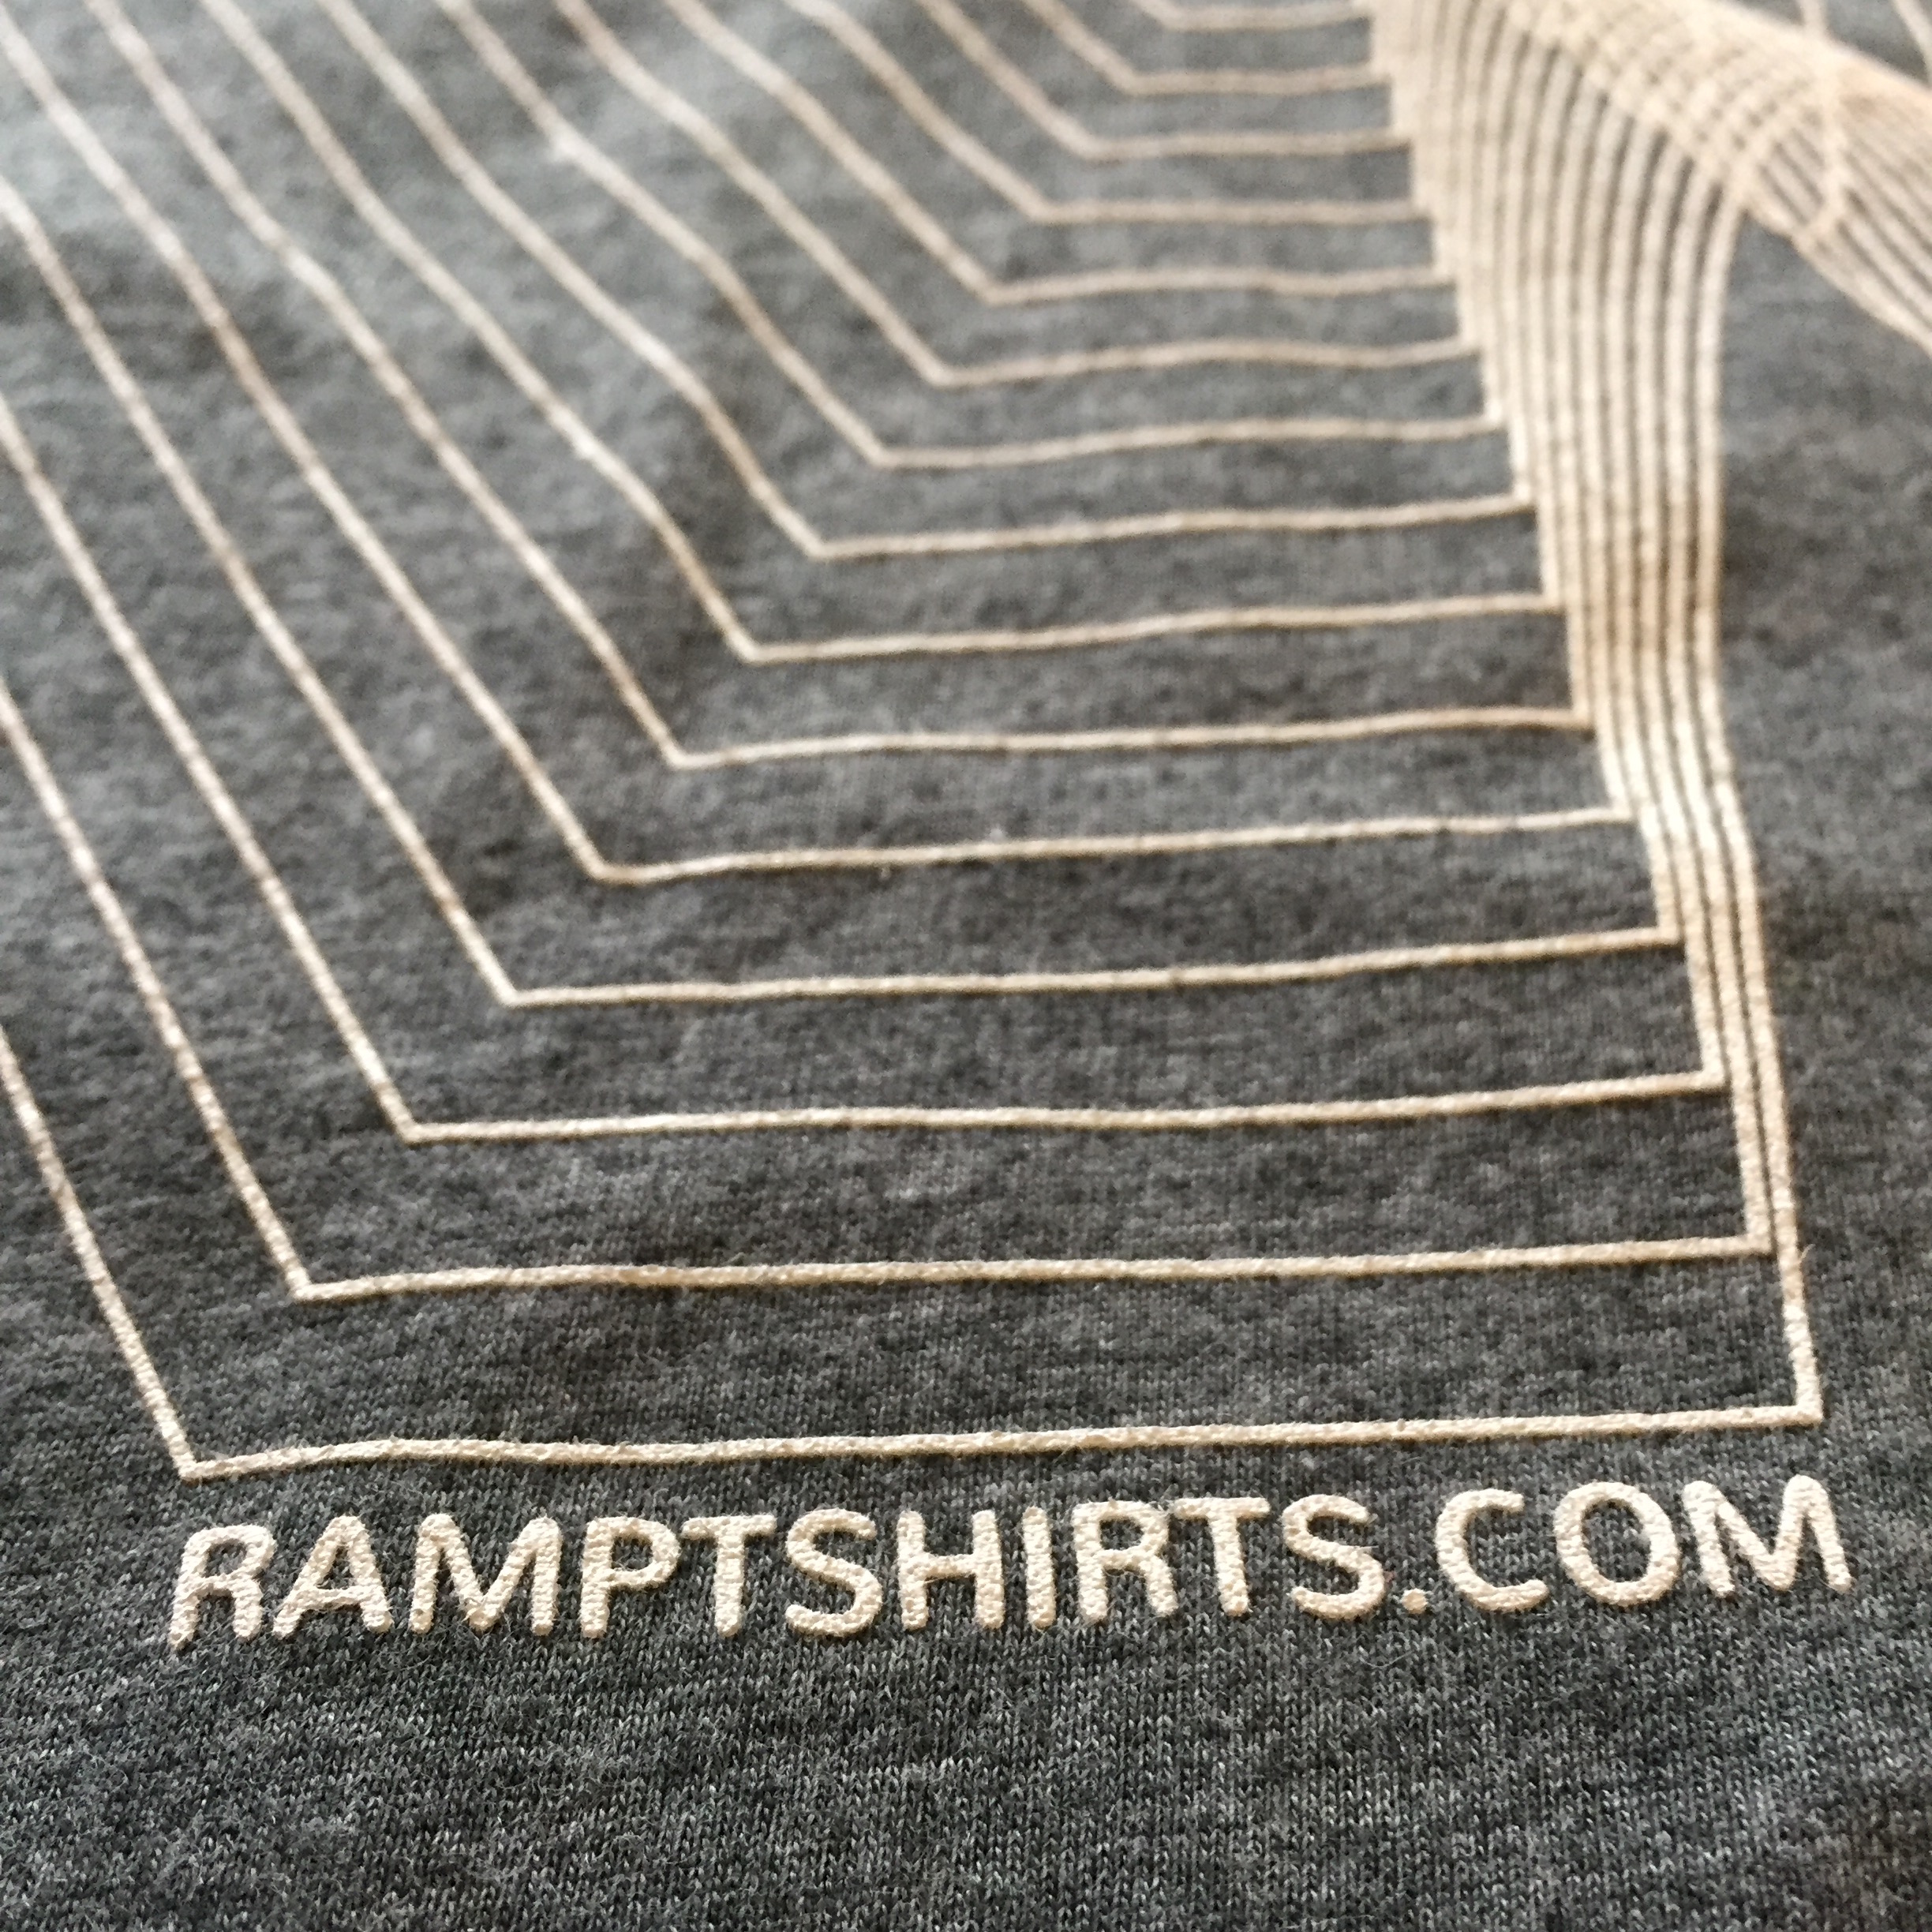 Screen print detail on Ramp promo t-shirt